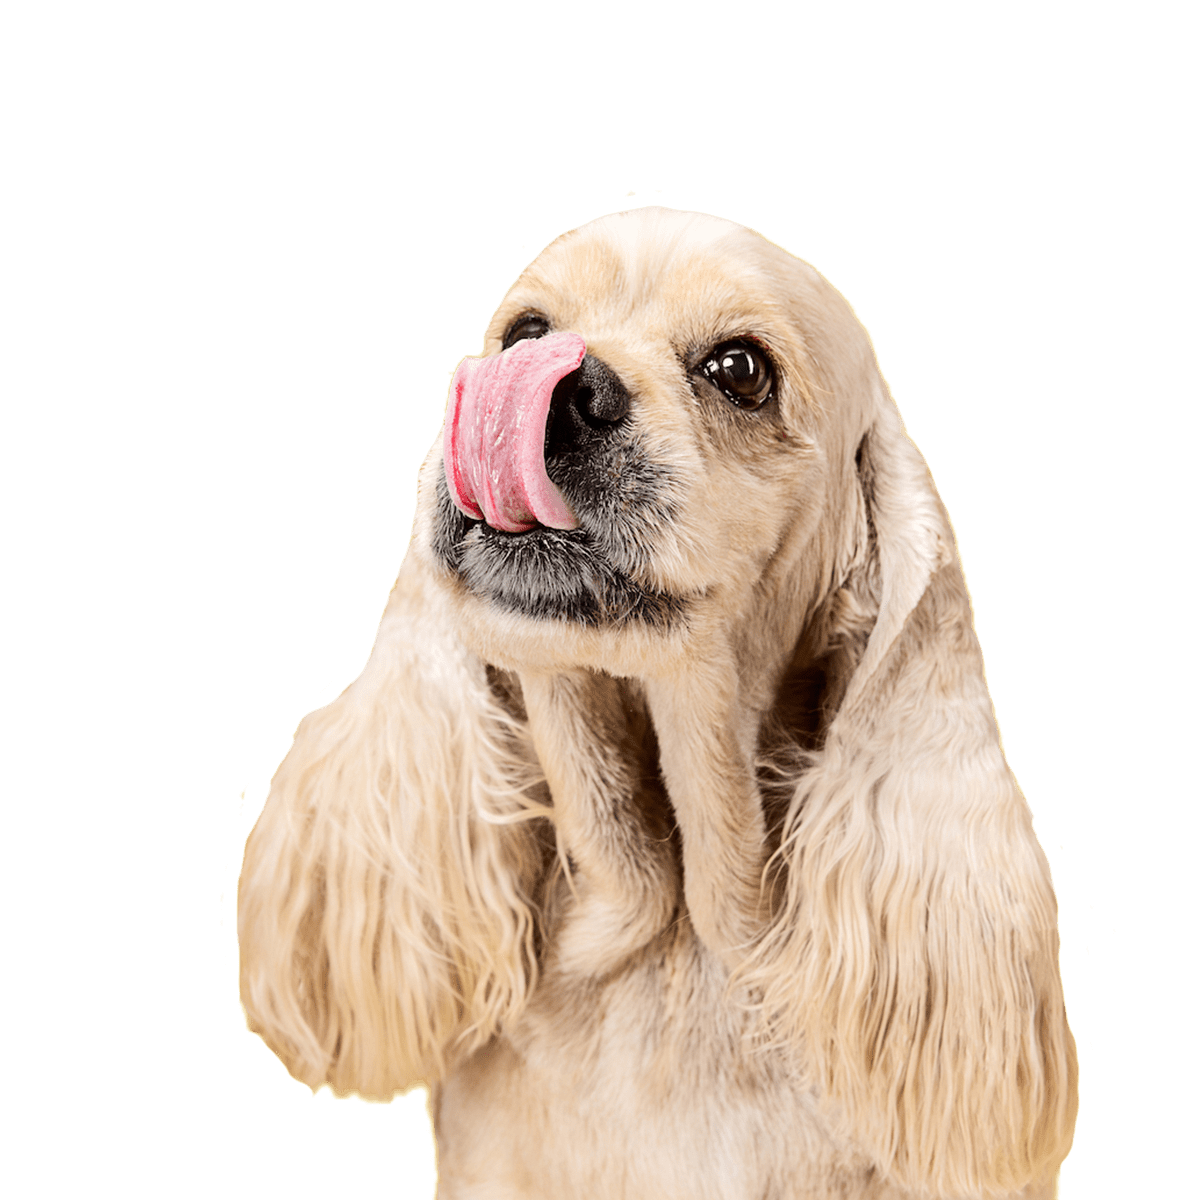 Spaniel Dog licking its nose during dog boarding gold coast